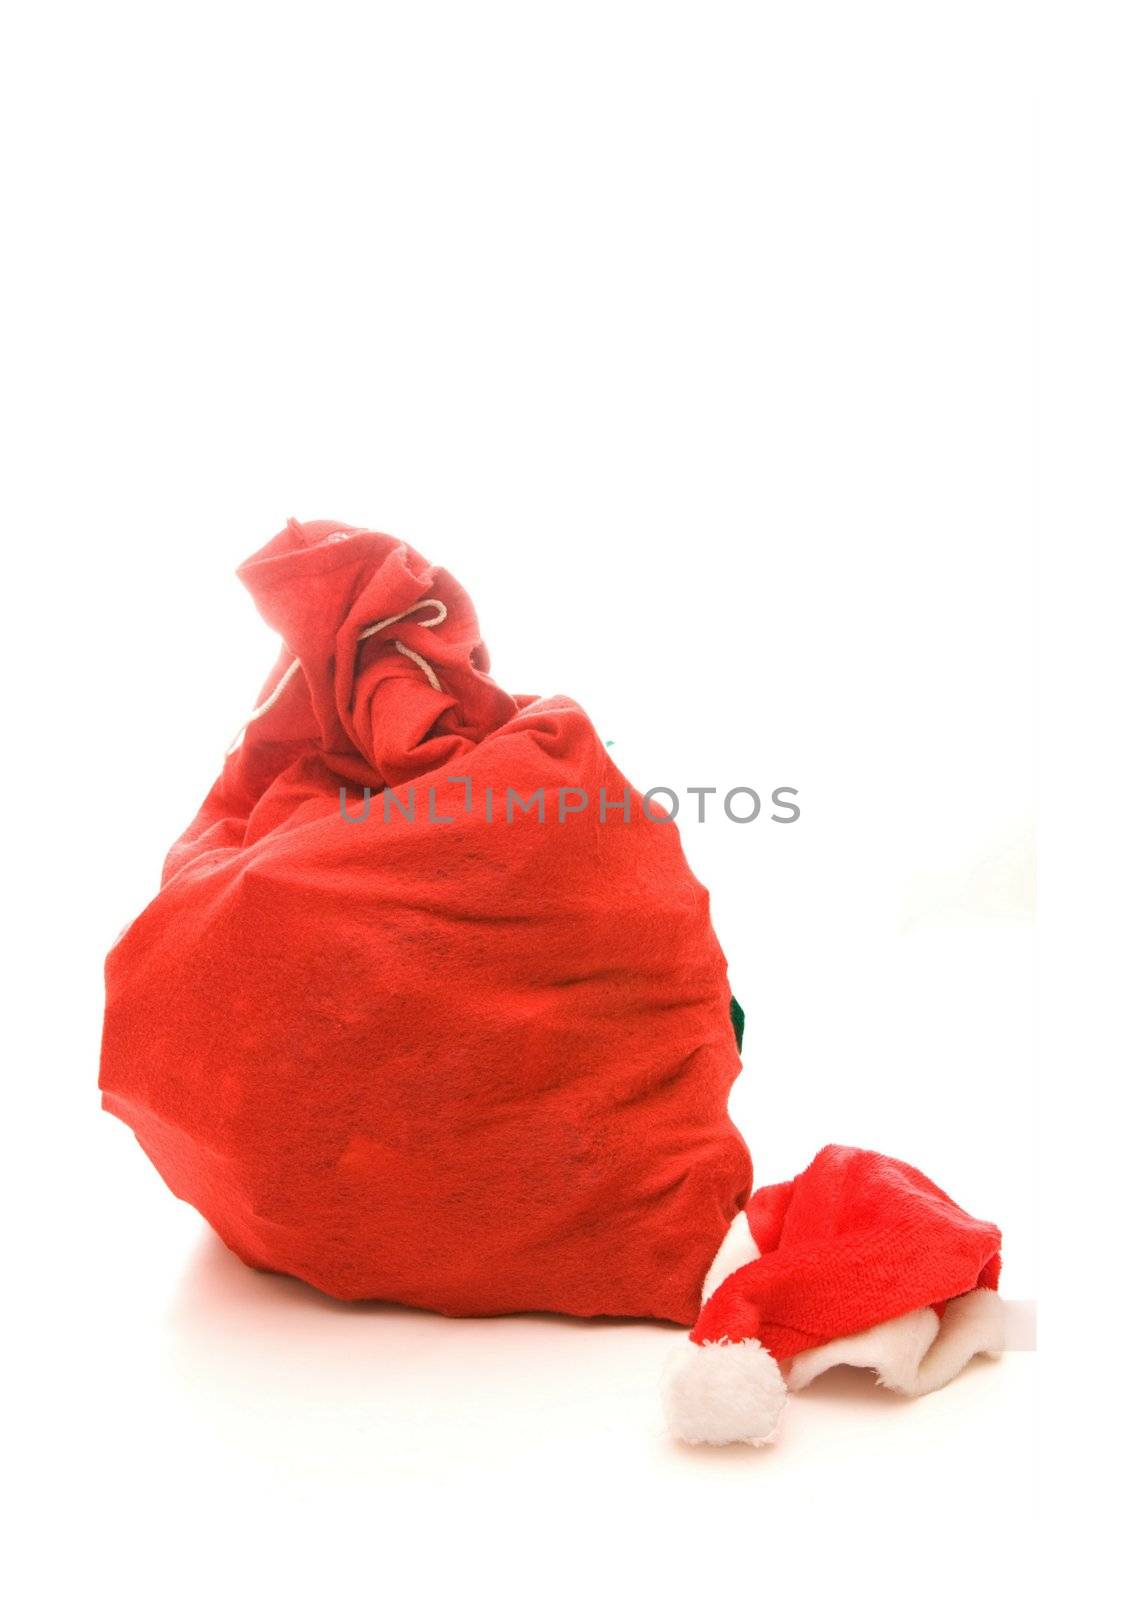 Santa Claus lost his bag and hat by Baltus